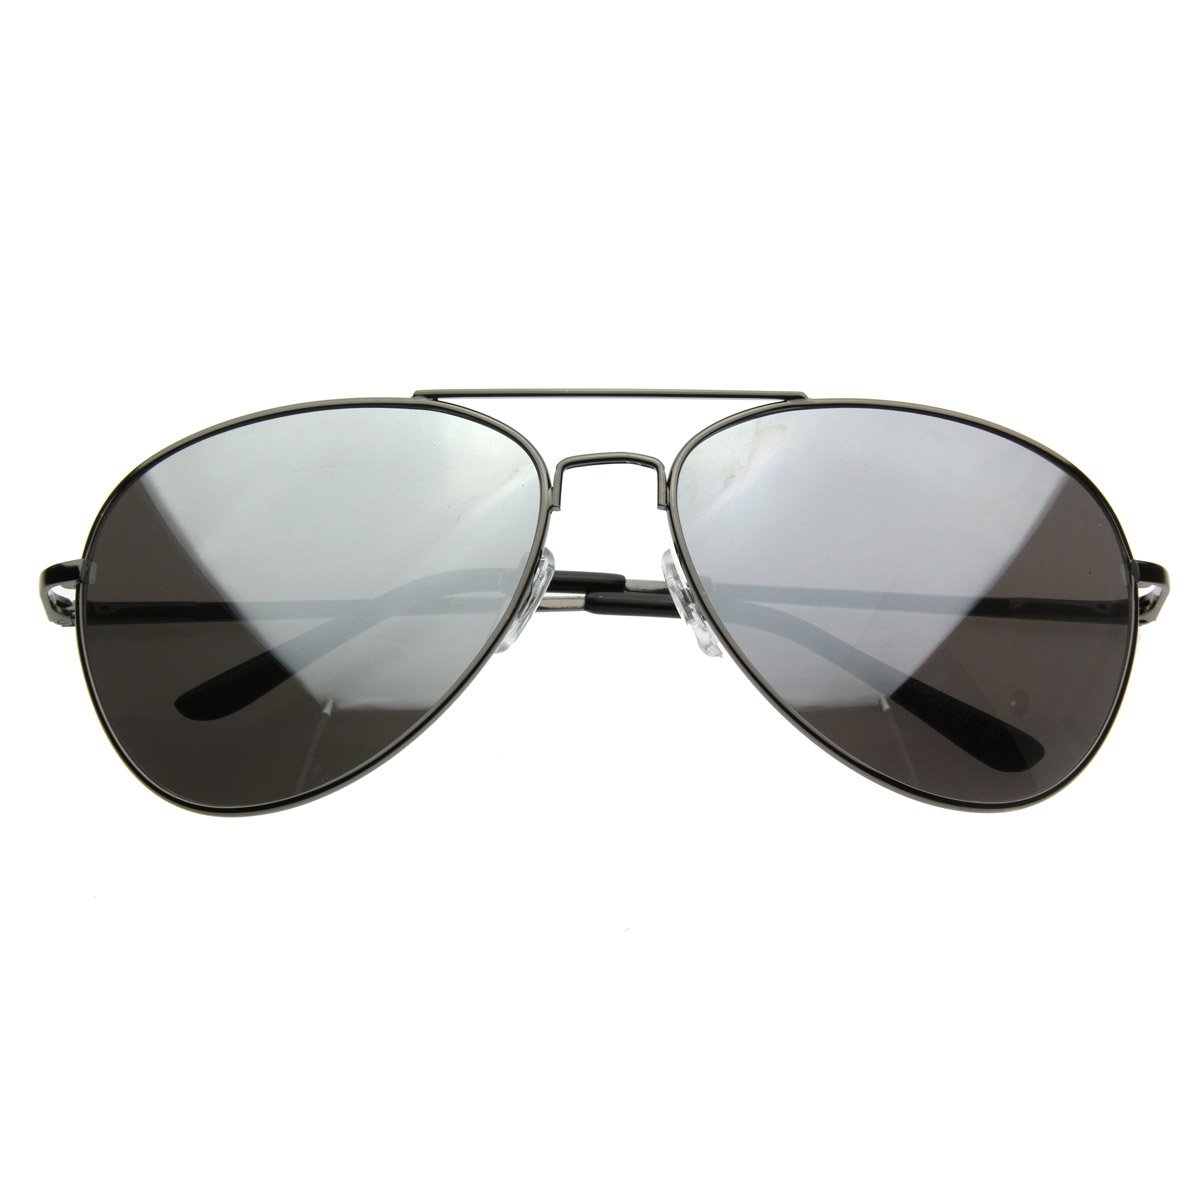 Premium Mirrored Aviator Top Gun Sunglasses W/ Spring Loaded Temples - Gunmetal Each